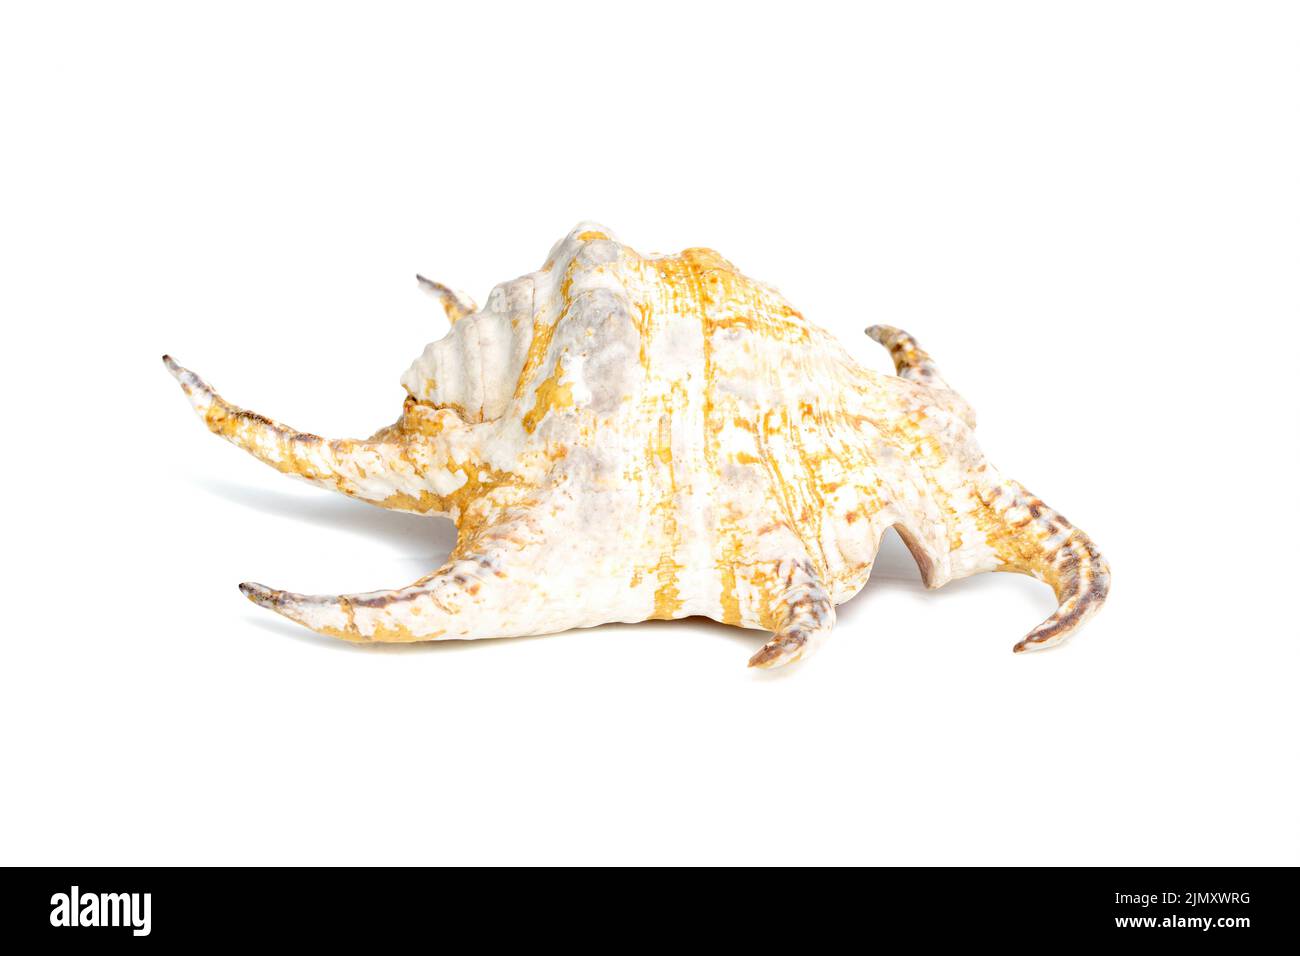 Image de Lambis chiragra, Harpago chiragra sur fond blanc. Animaux sous-marins. Coquillages. Banque D'Images